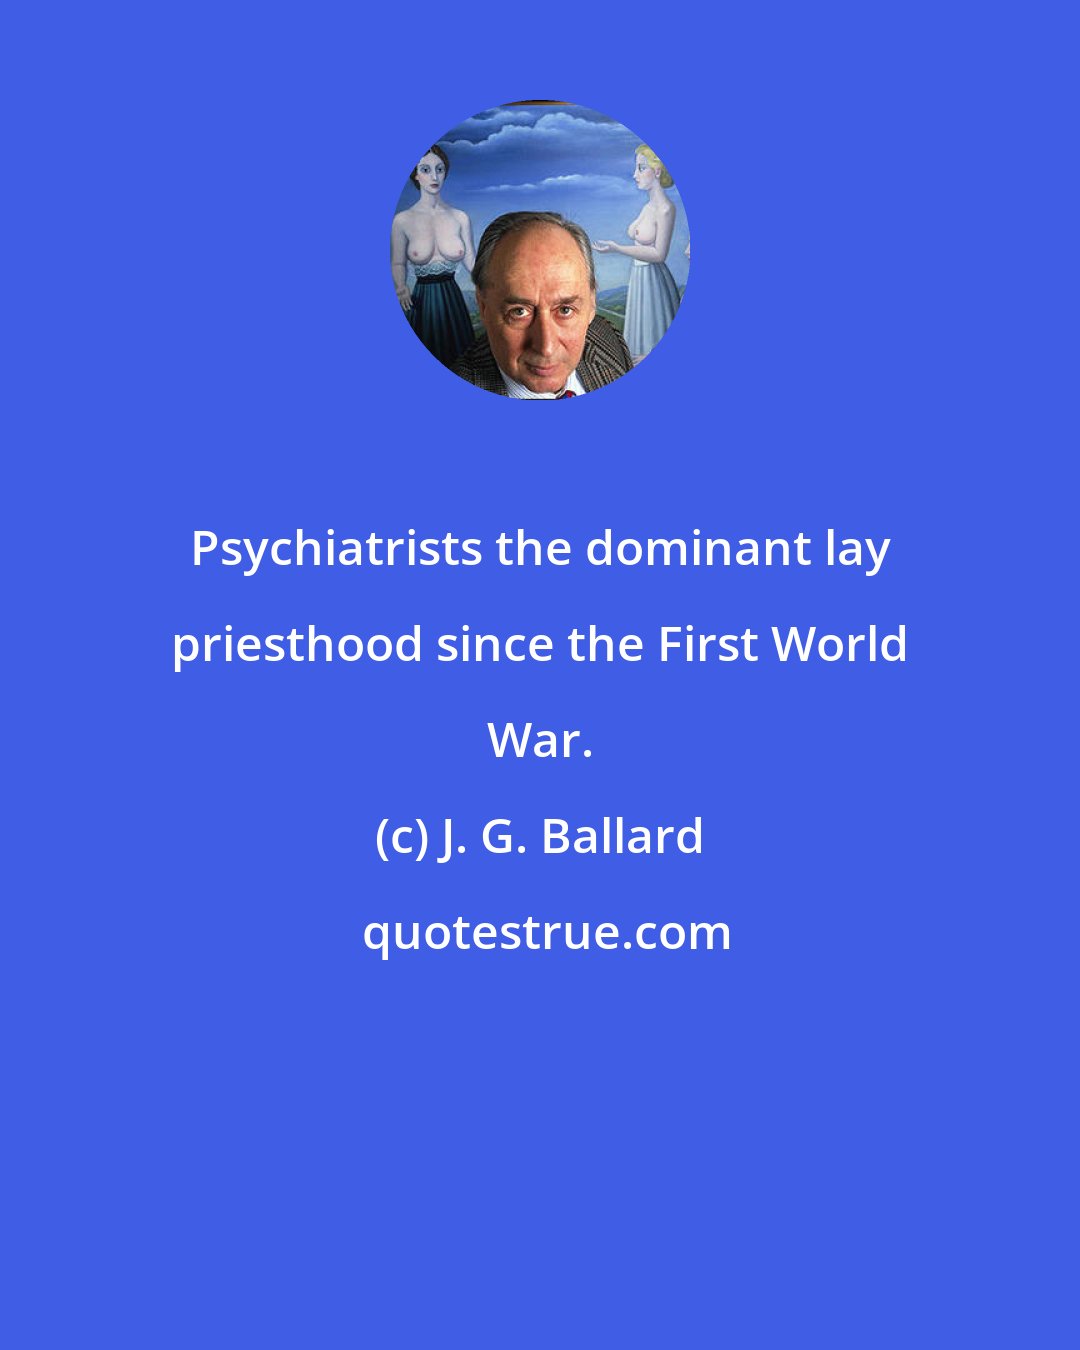 J. G. Ballard: Psychiatrists the dominant lay priesthood since the First World War.